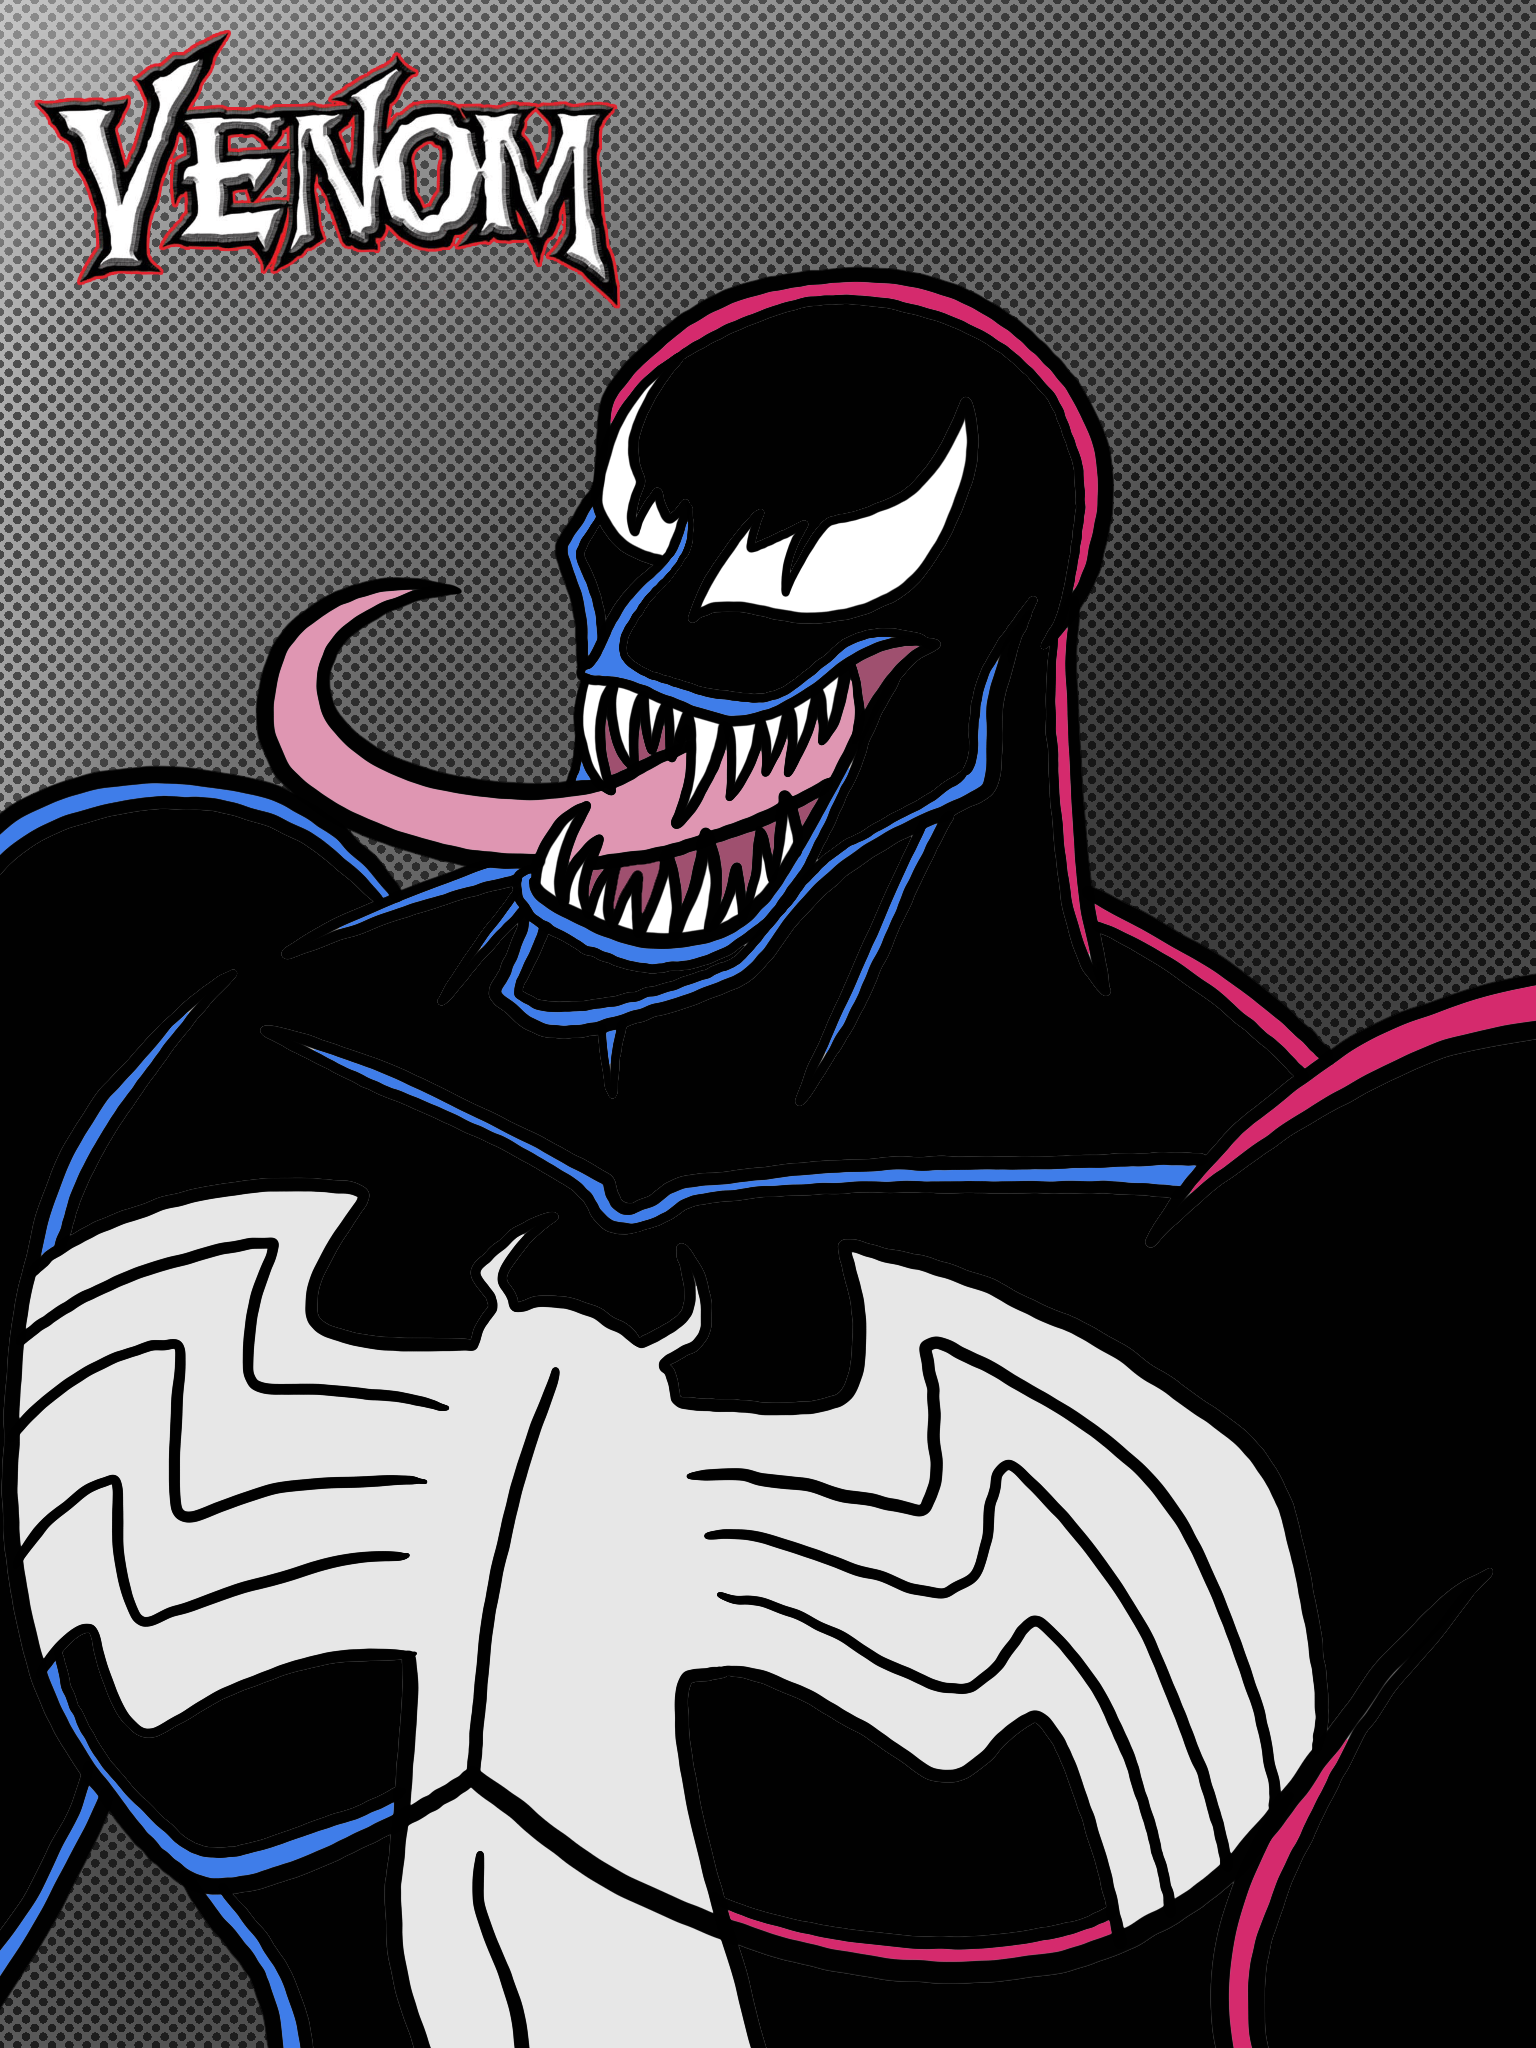 Venom (Spider-Man: The Animated Series style) by MelSpyRose on DeviantArt